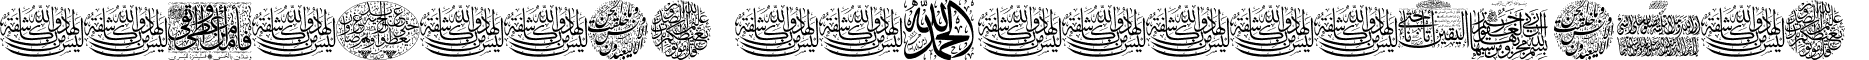 Aayat Quraan036 Regular font - Aayat_Quraan_036.ttf